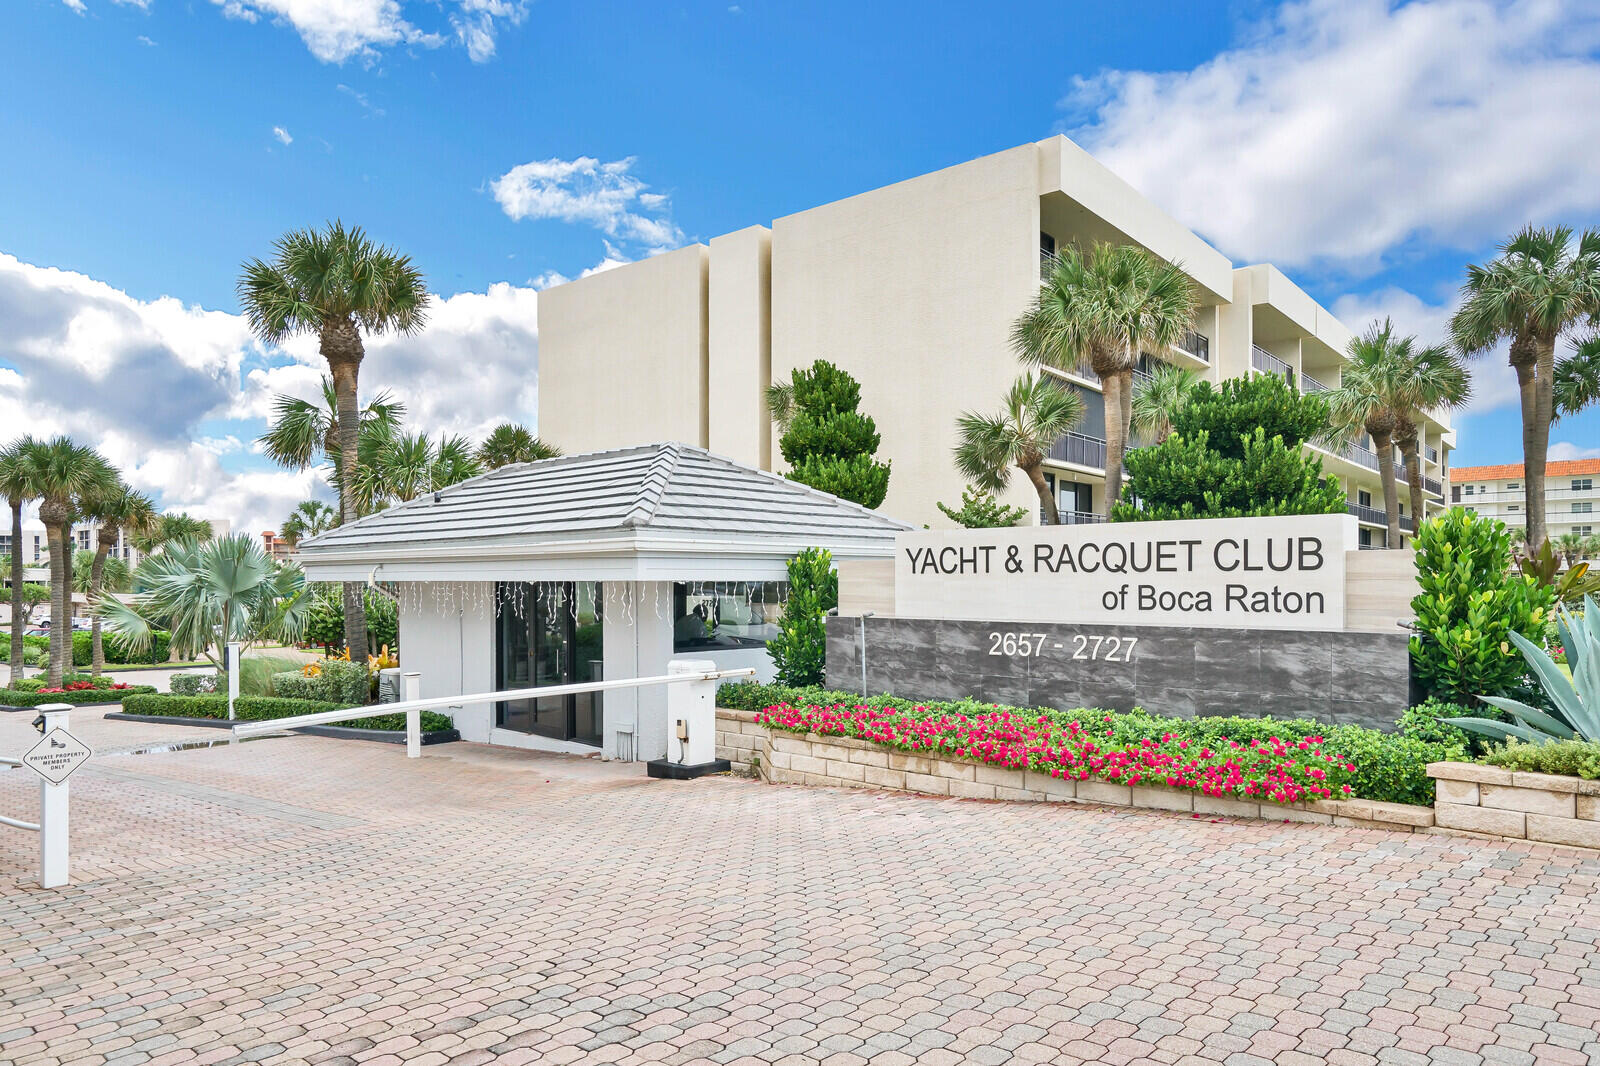 Property for Sale at 2727 N Ocean Boulevard A203, Boca Raton, Palm Beach County, Florida - Bedrooms: 2 
Bathrooms: 2  - $849,900